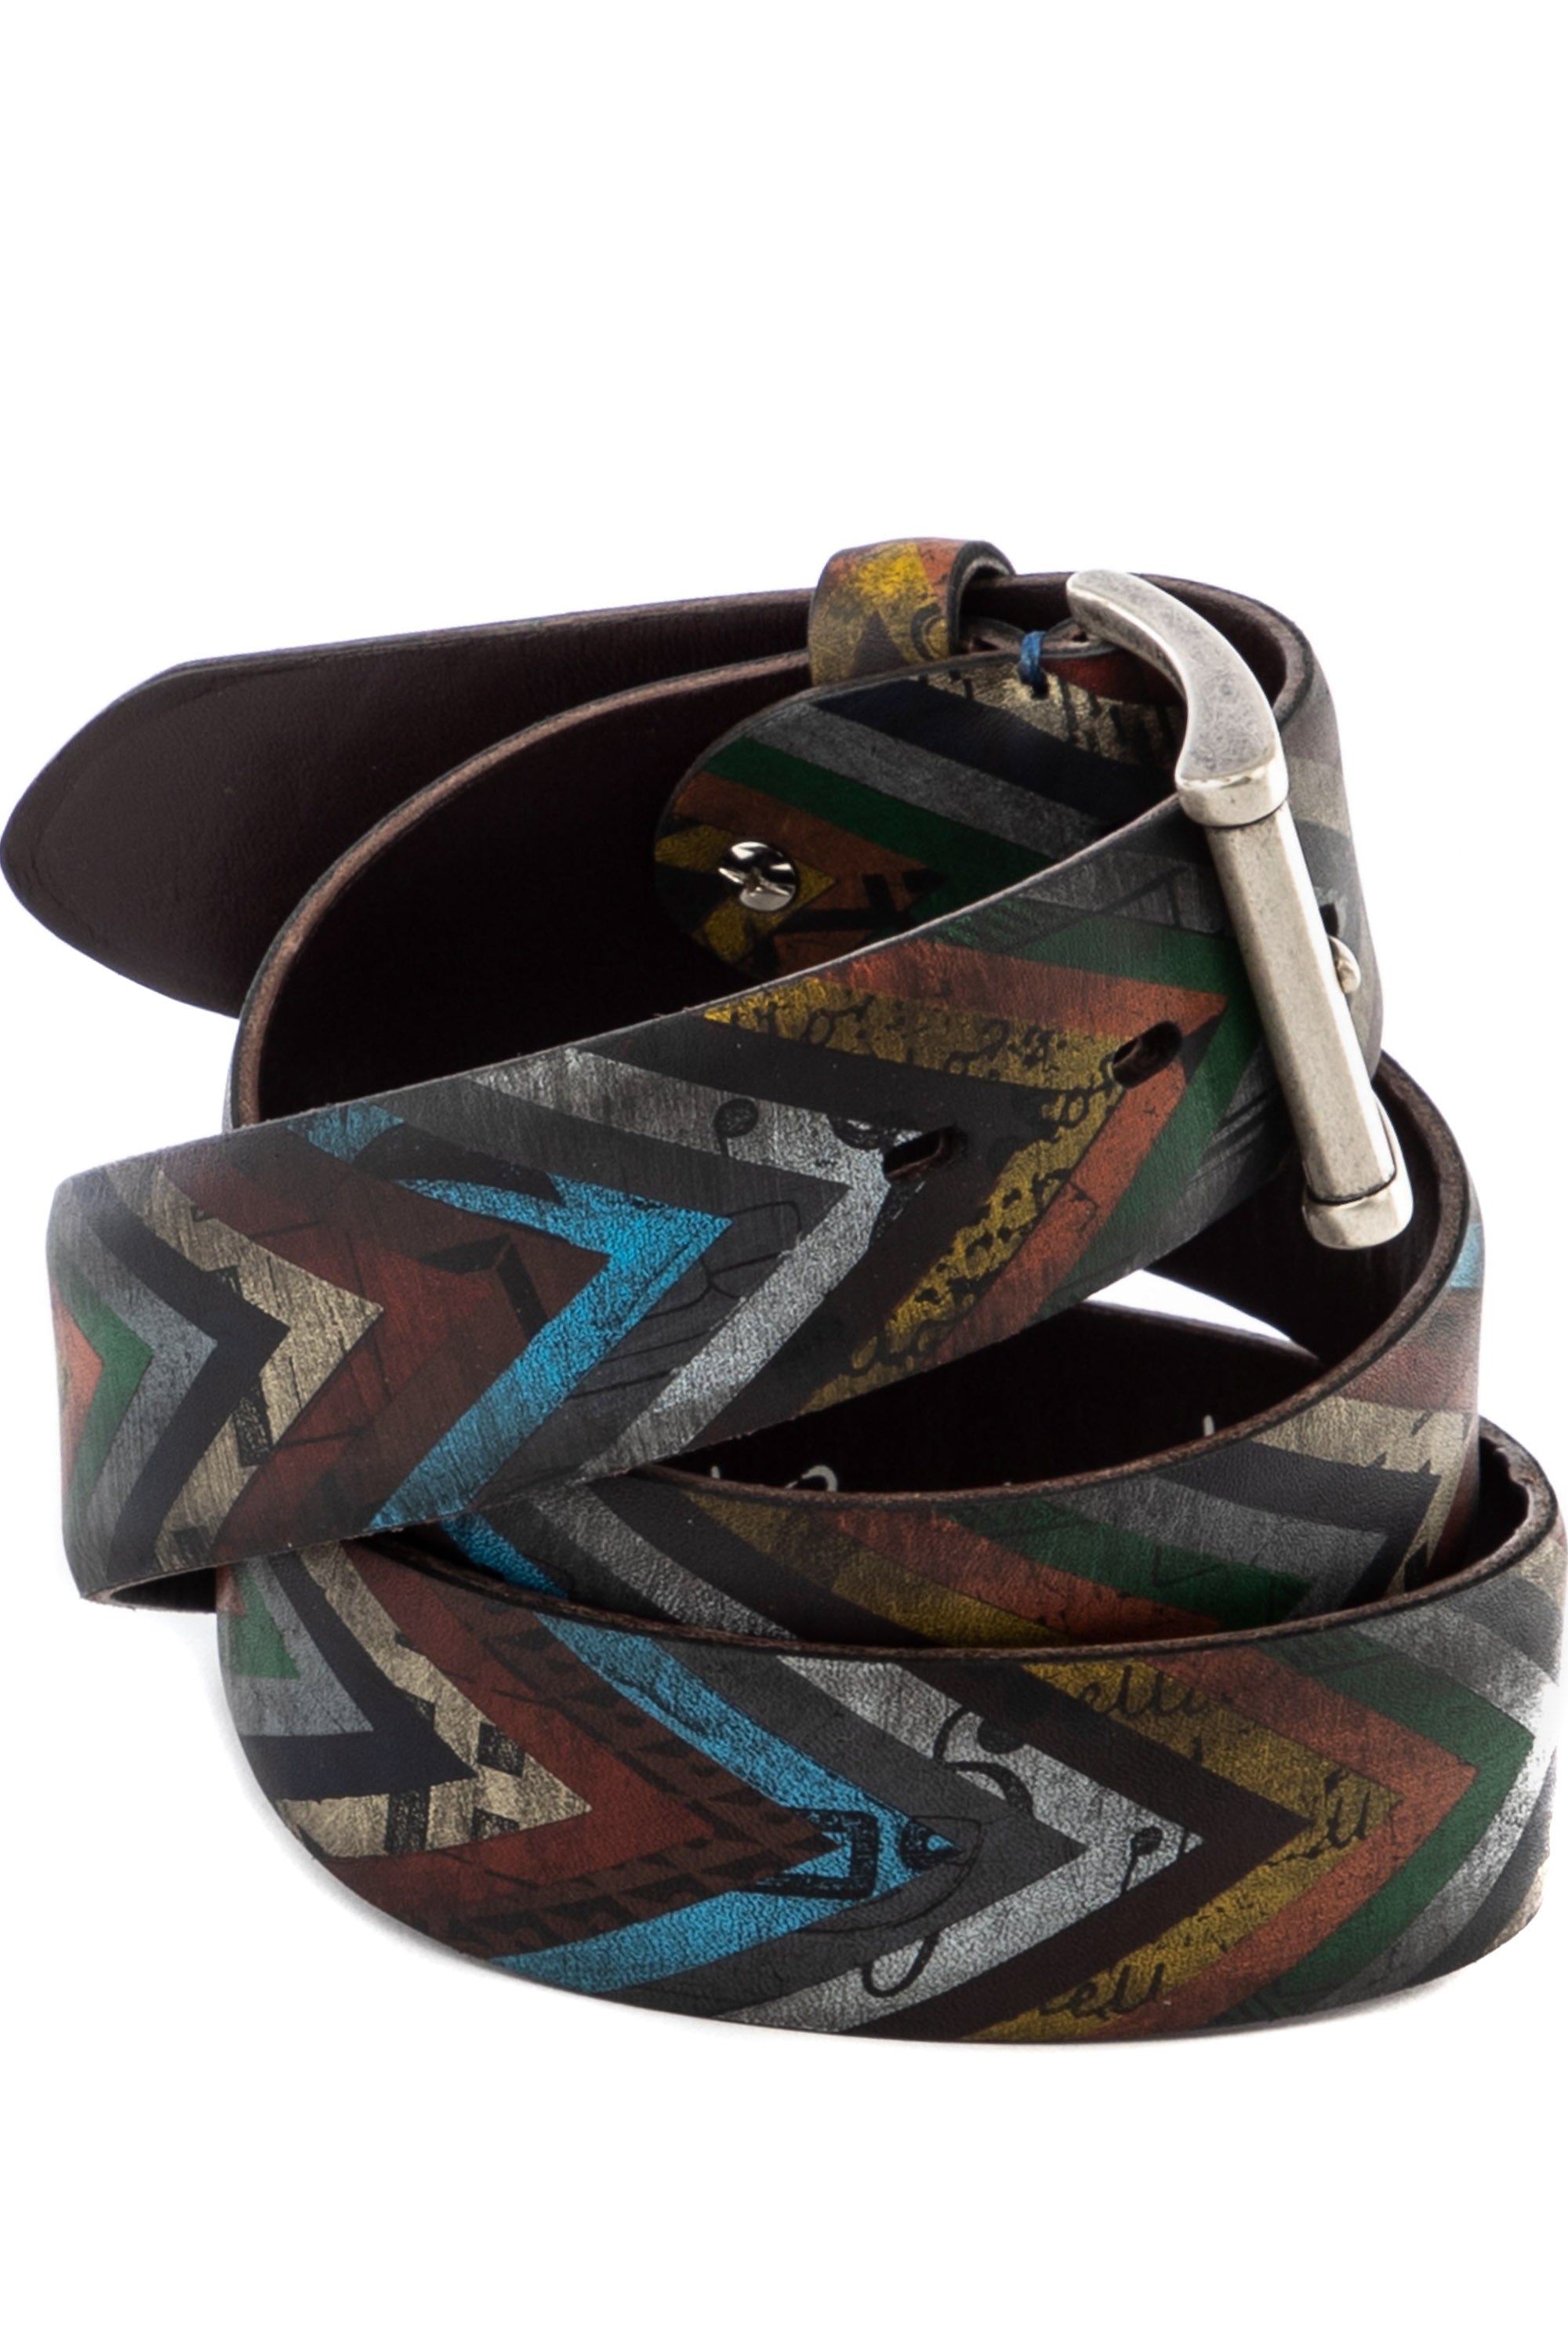 Handcrafted belt in dark "herringbone" leather